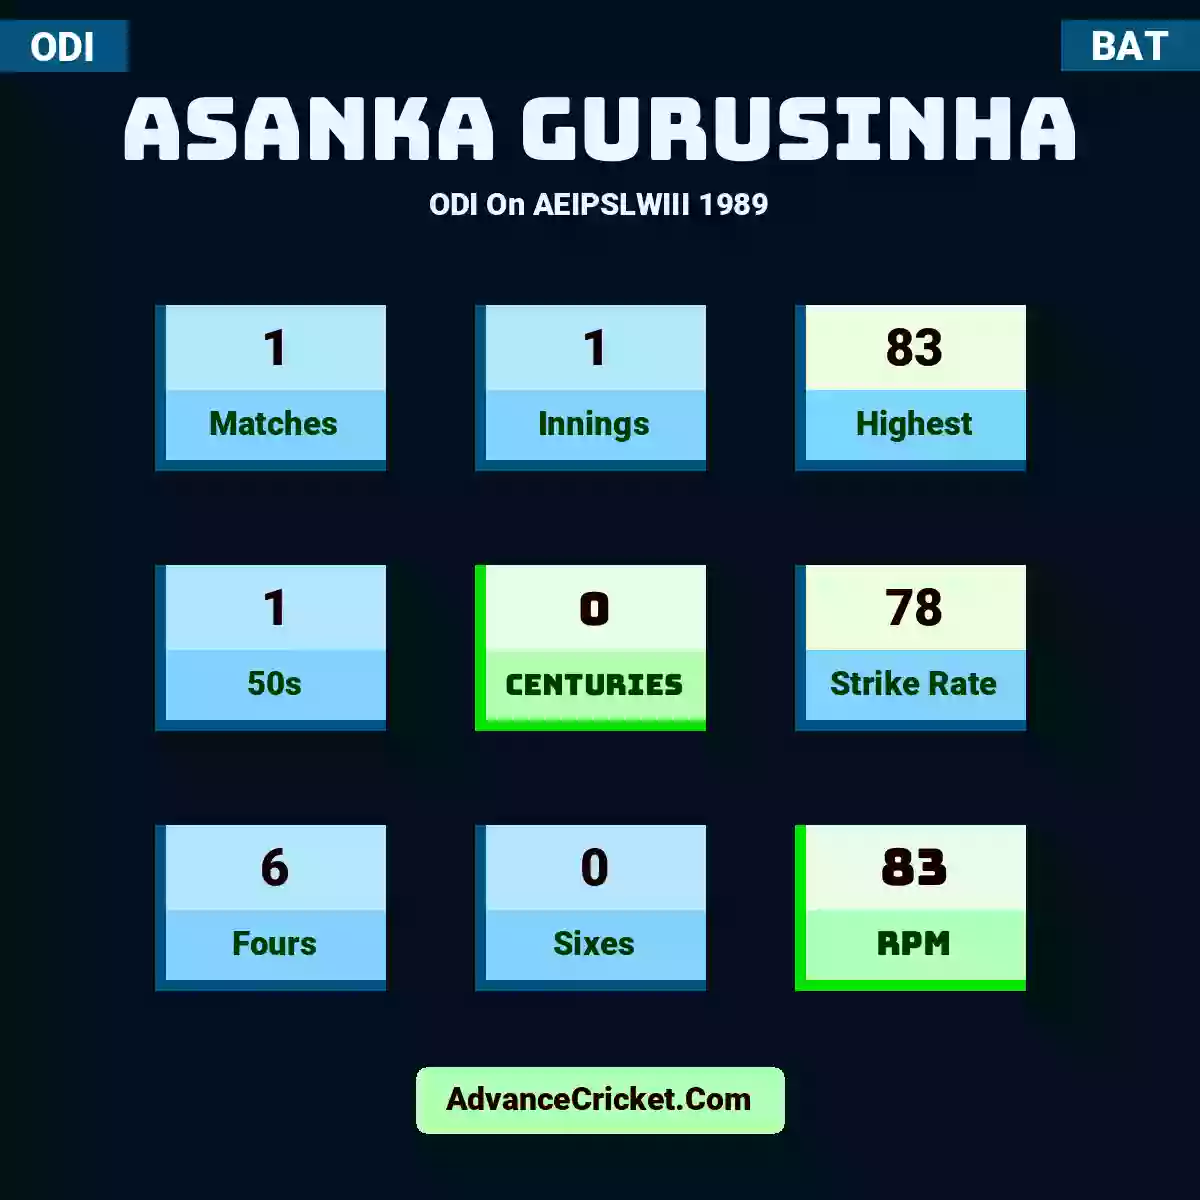 Asanka Gurusinha ODI  On AEIPSLWIII 1989, Asanka Gurusinha played 1 matches, scored 83 runs as highest, 1 half-centuries, and 0 centuries, with a strike rate of 78. A.Gurusinha hit 6 fours and 0 sixes, with an RPM of 83.